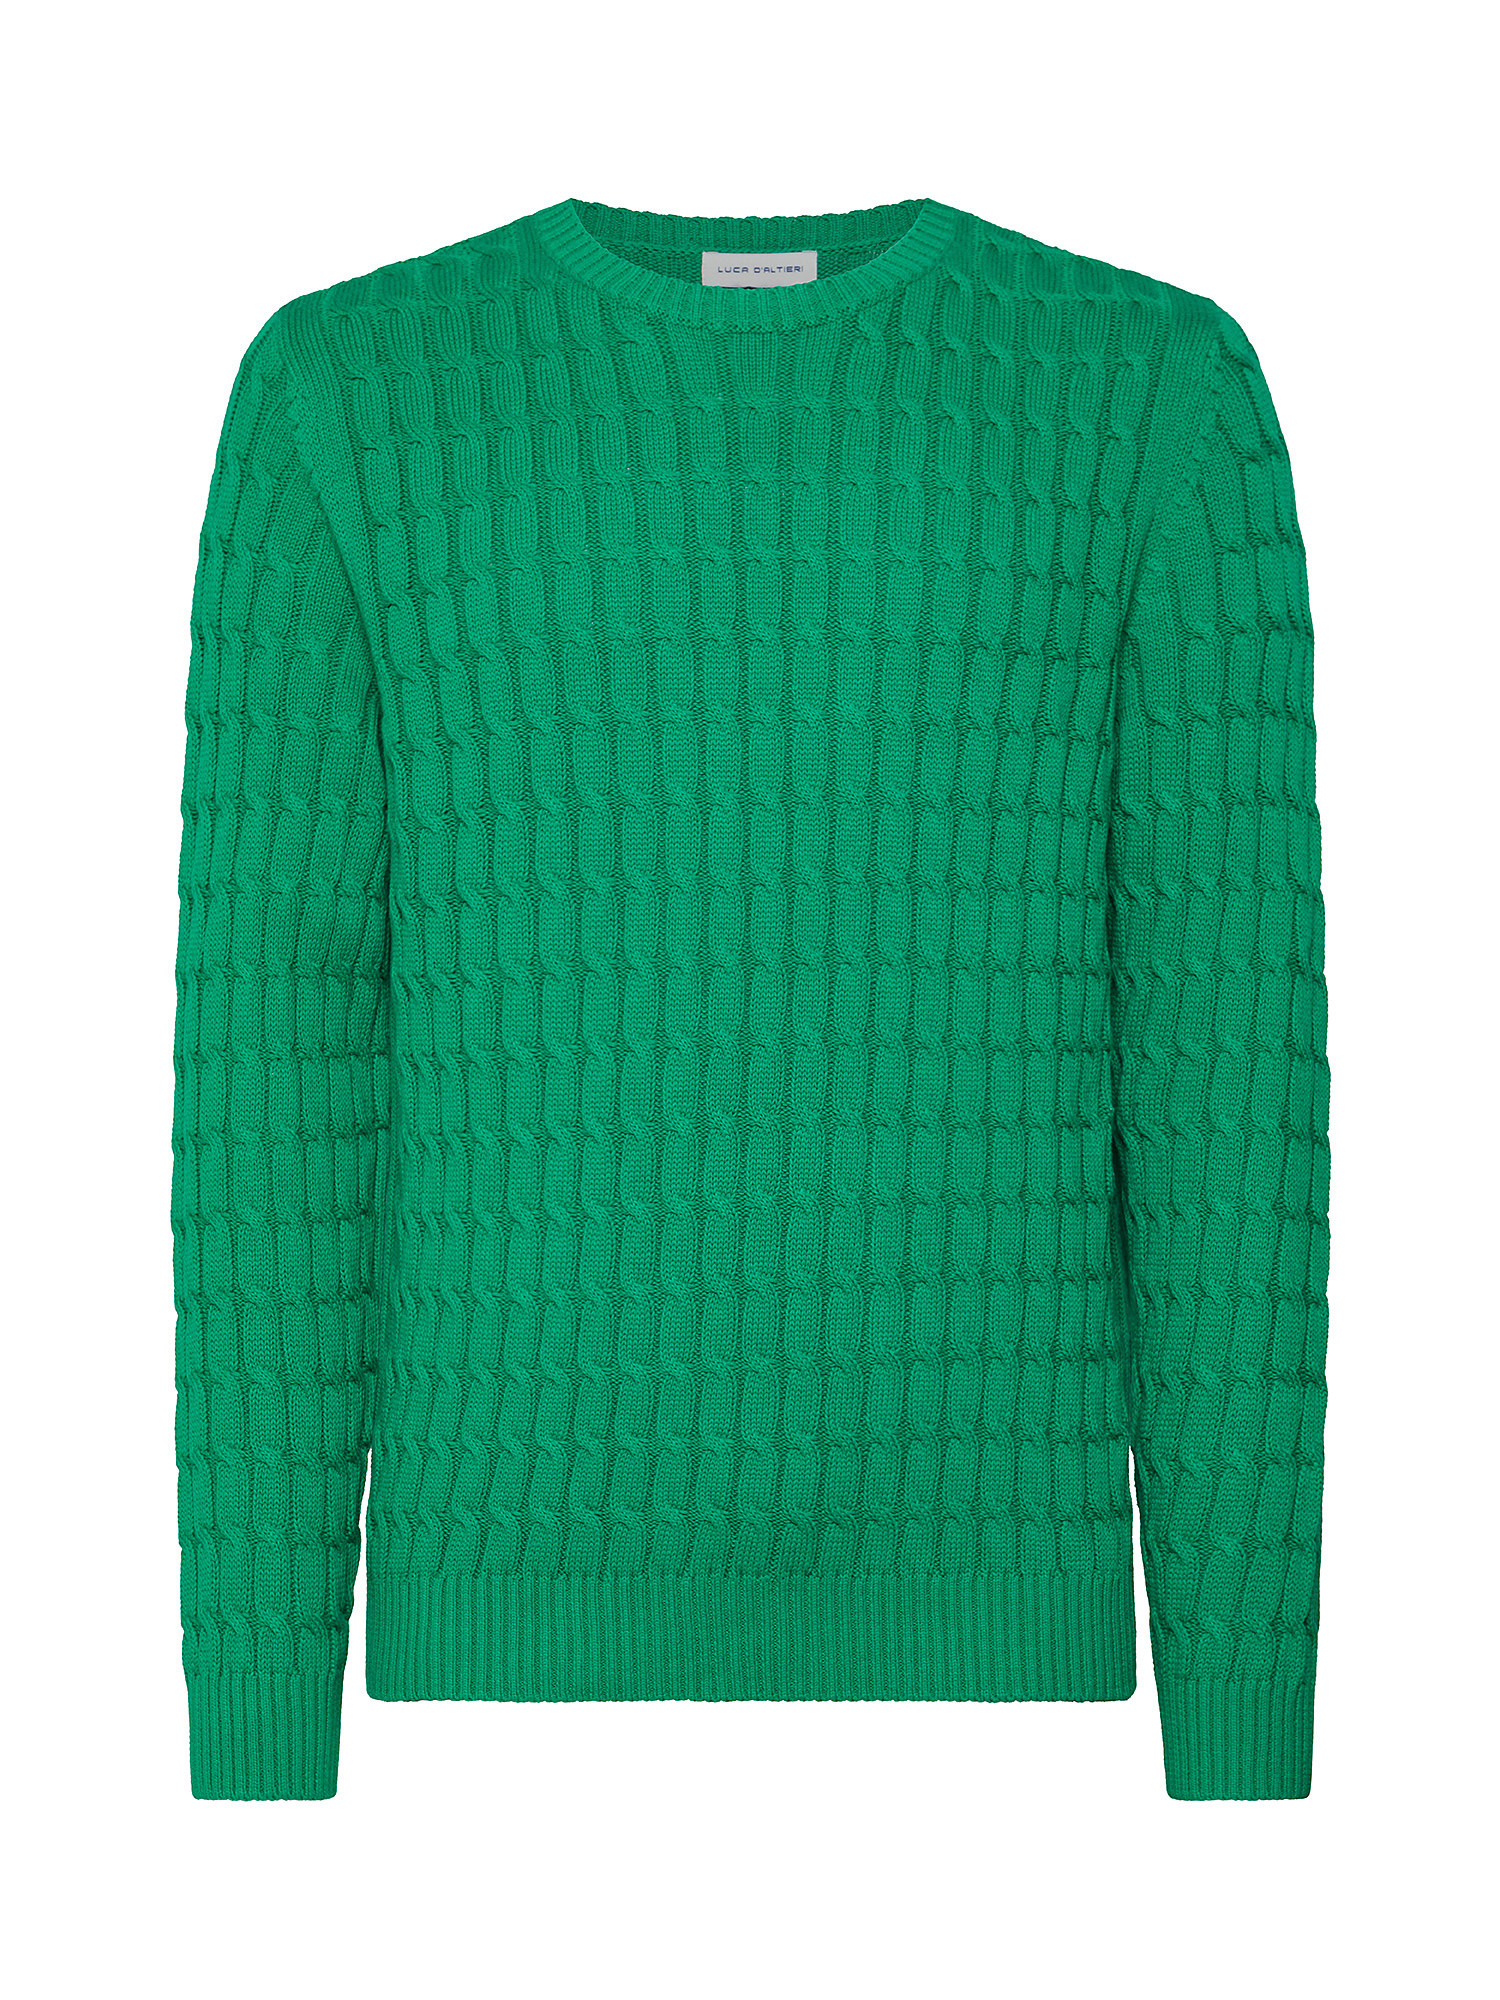 Luca D'Altieri - Crewneck sweater with pure cotton braids, Mint, large image number 0